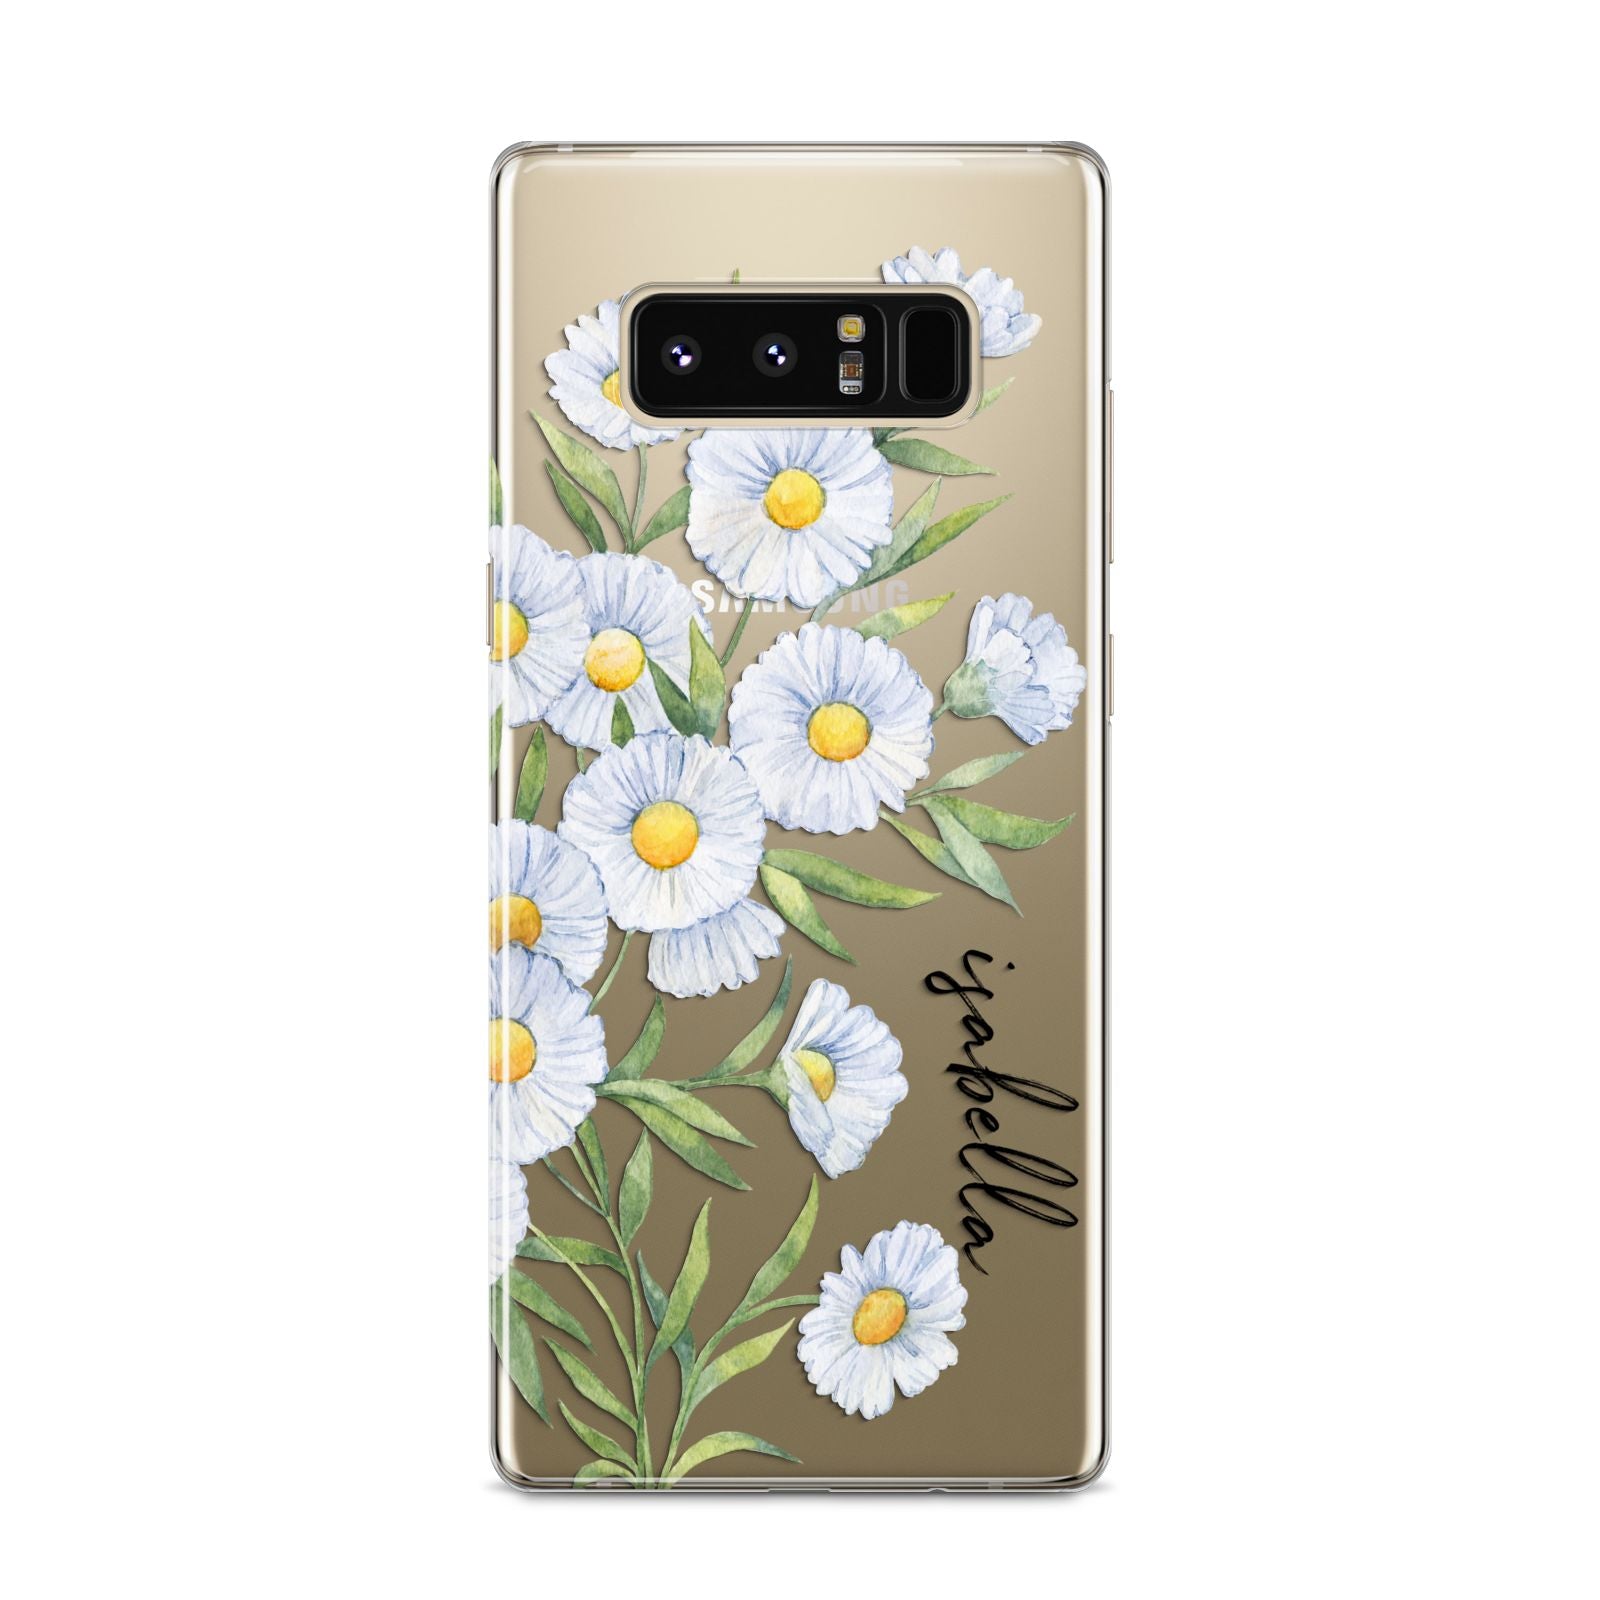 Personalised Daisy Flower Samsung Galaxy S8 Case